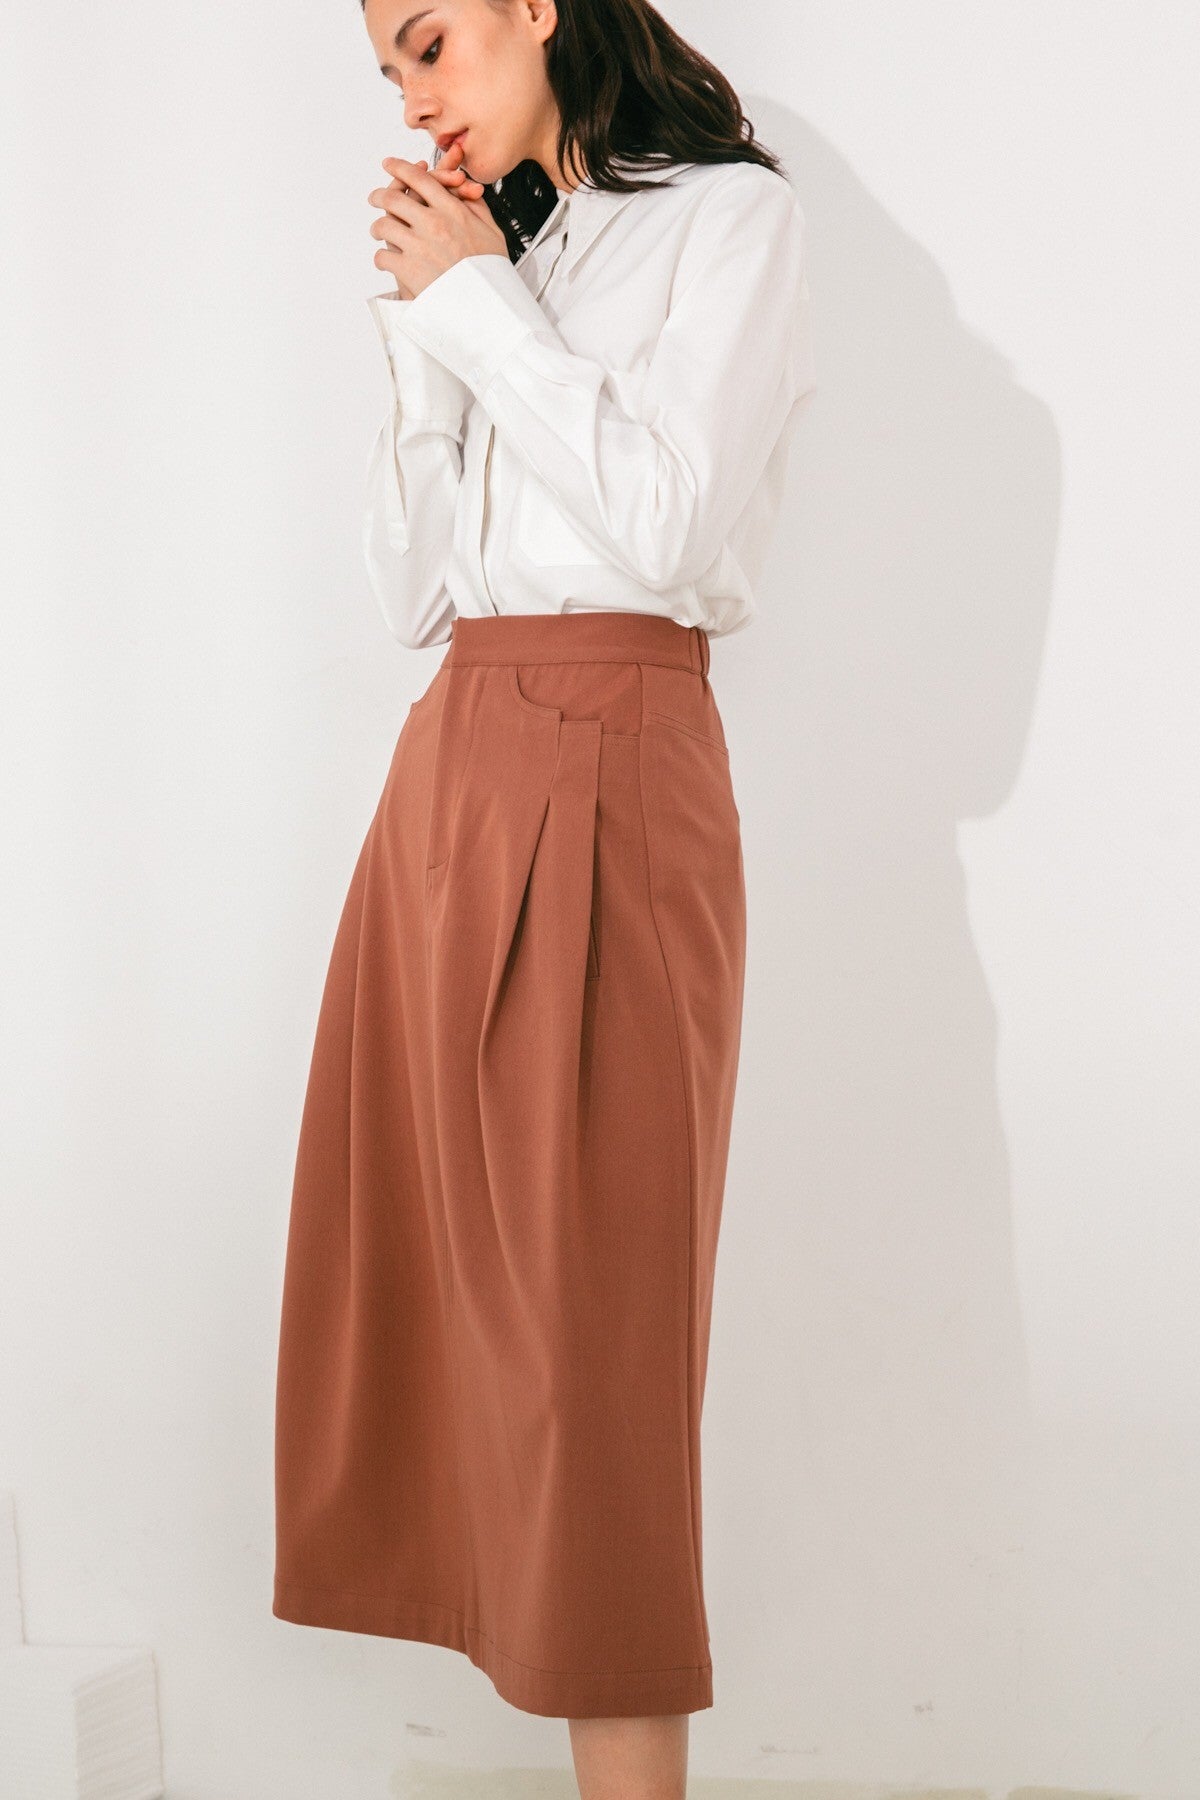 SKYE San Francisco SF shop ethical sustainable modern minimalist elegant quality women clothing fashion brand Aurelie Midi Skirt Light Brown 6